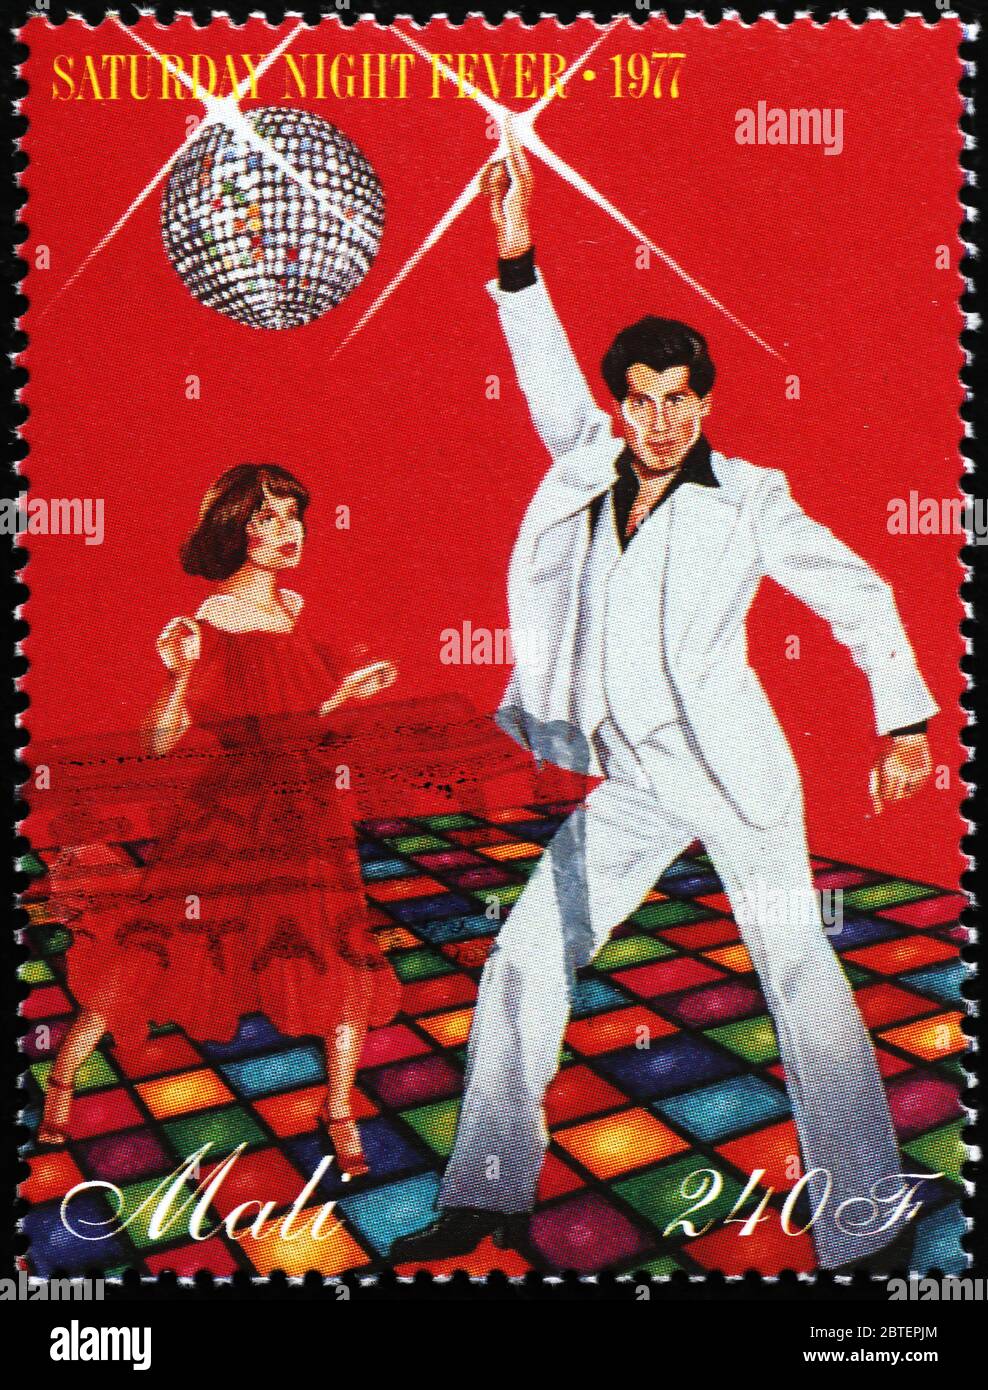 John Travolta in Saturday night fever on stamp Stock Photo